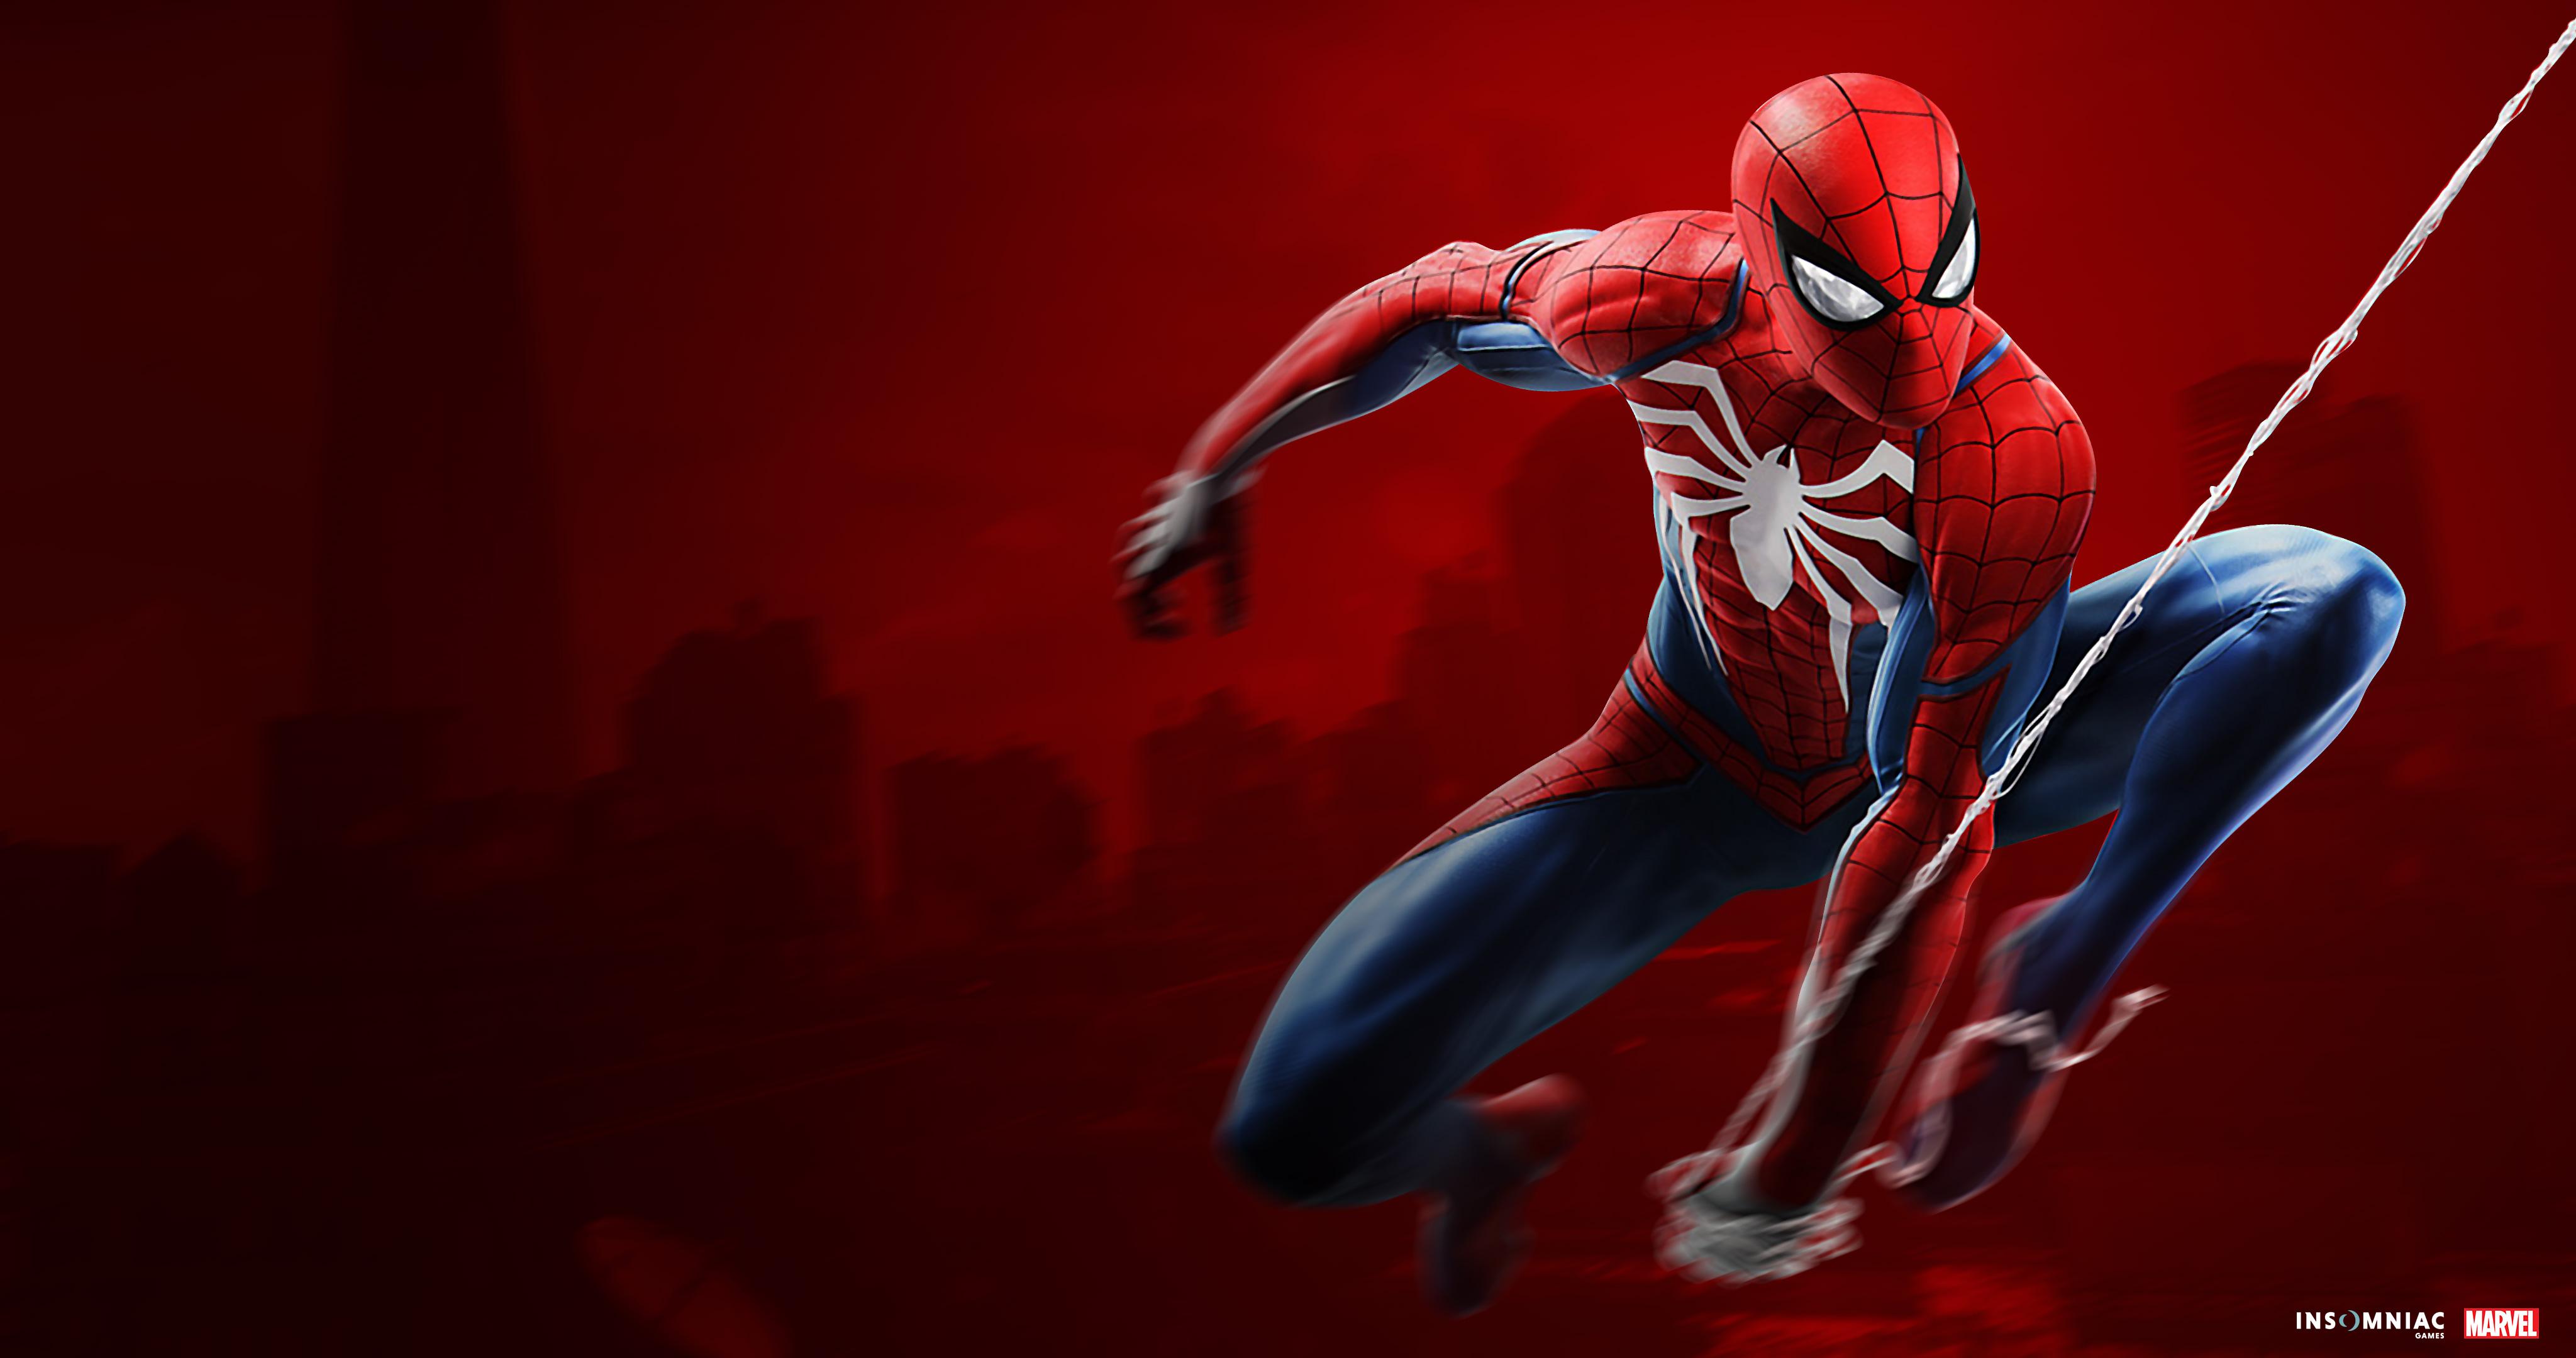 Spider-Man PS4 blog gaming test lageekroom